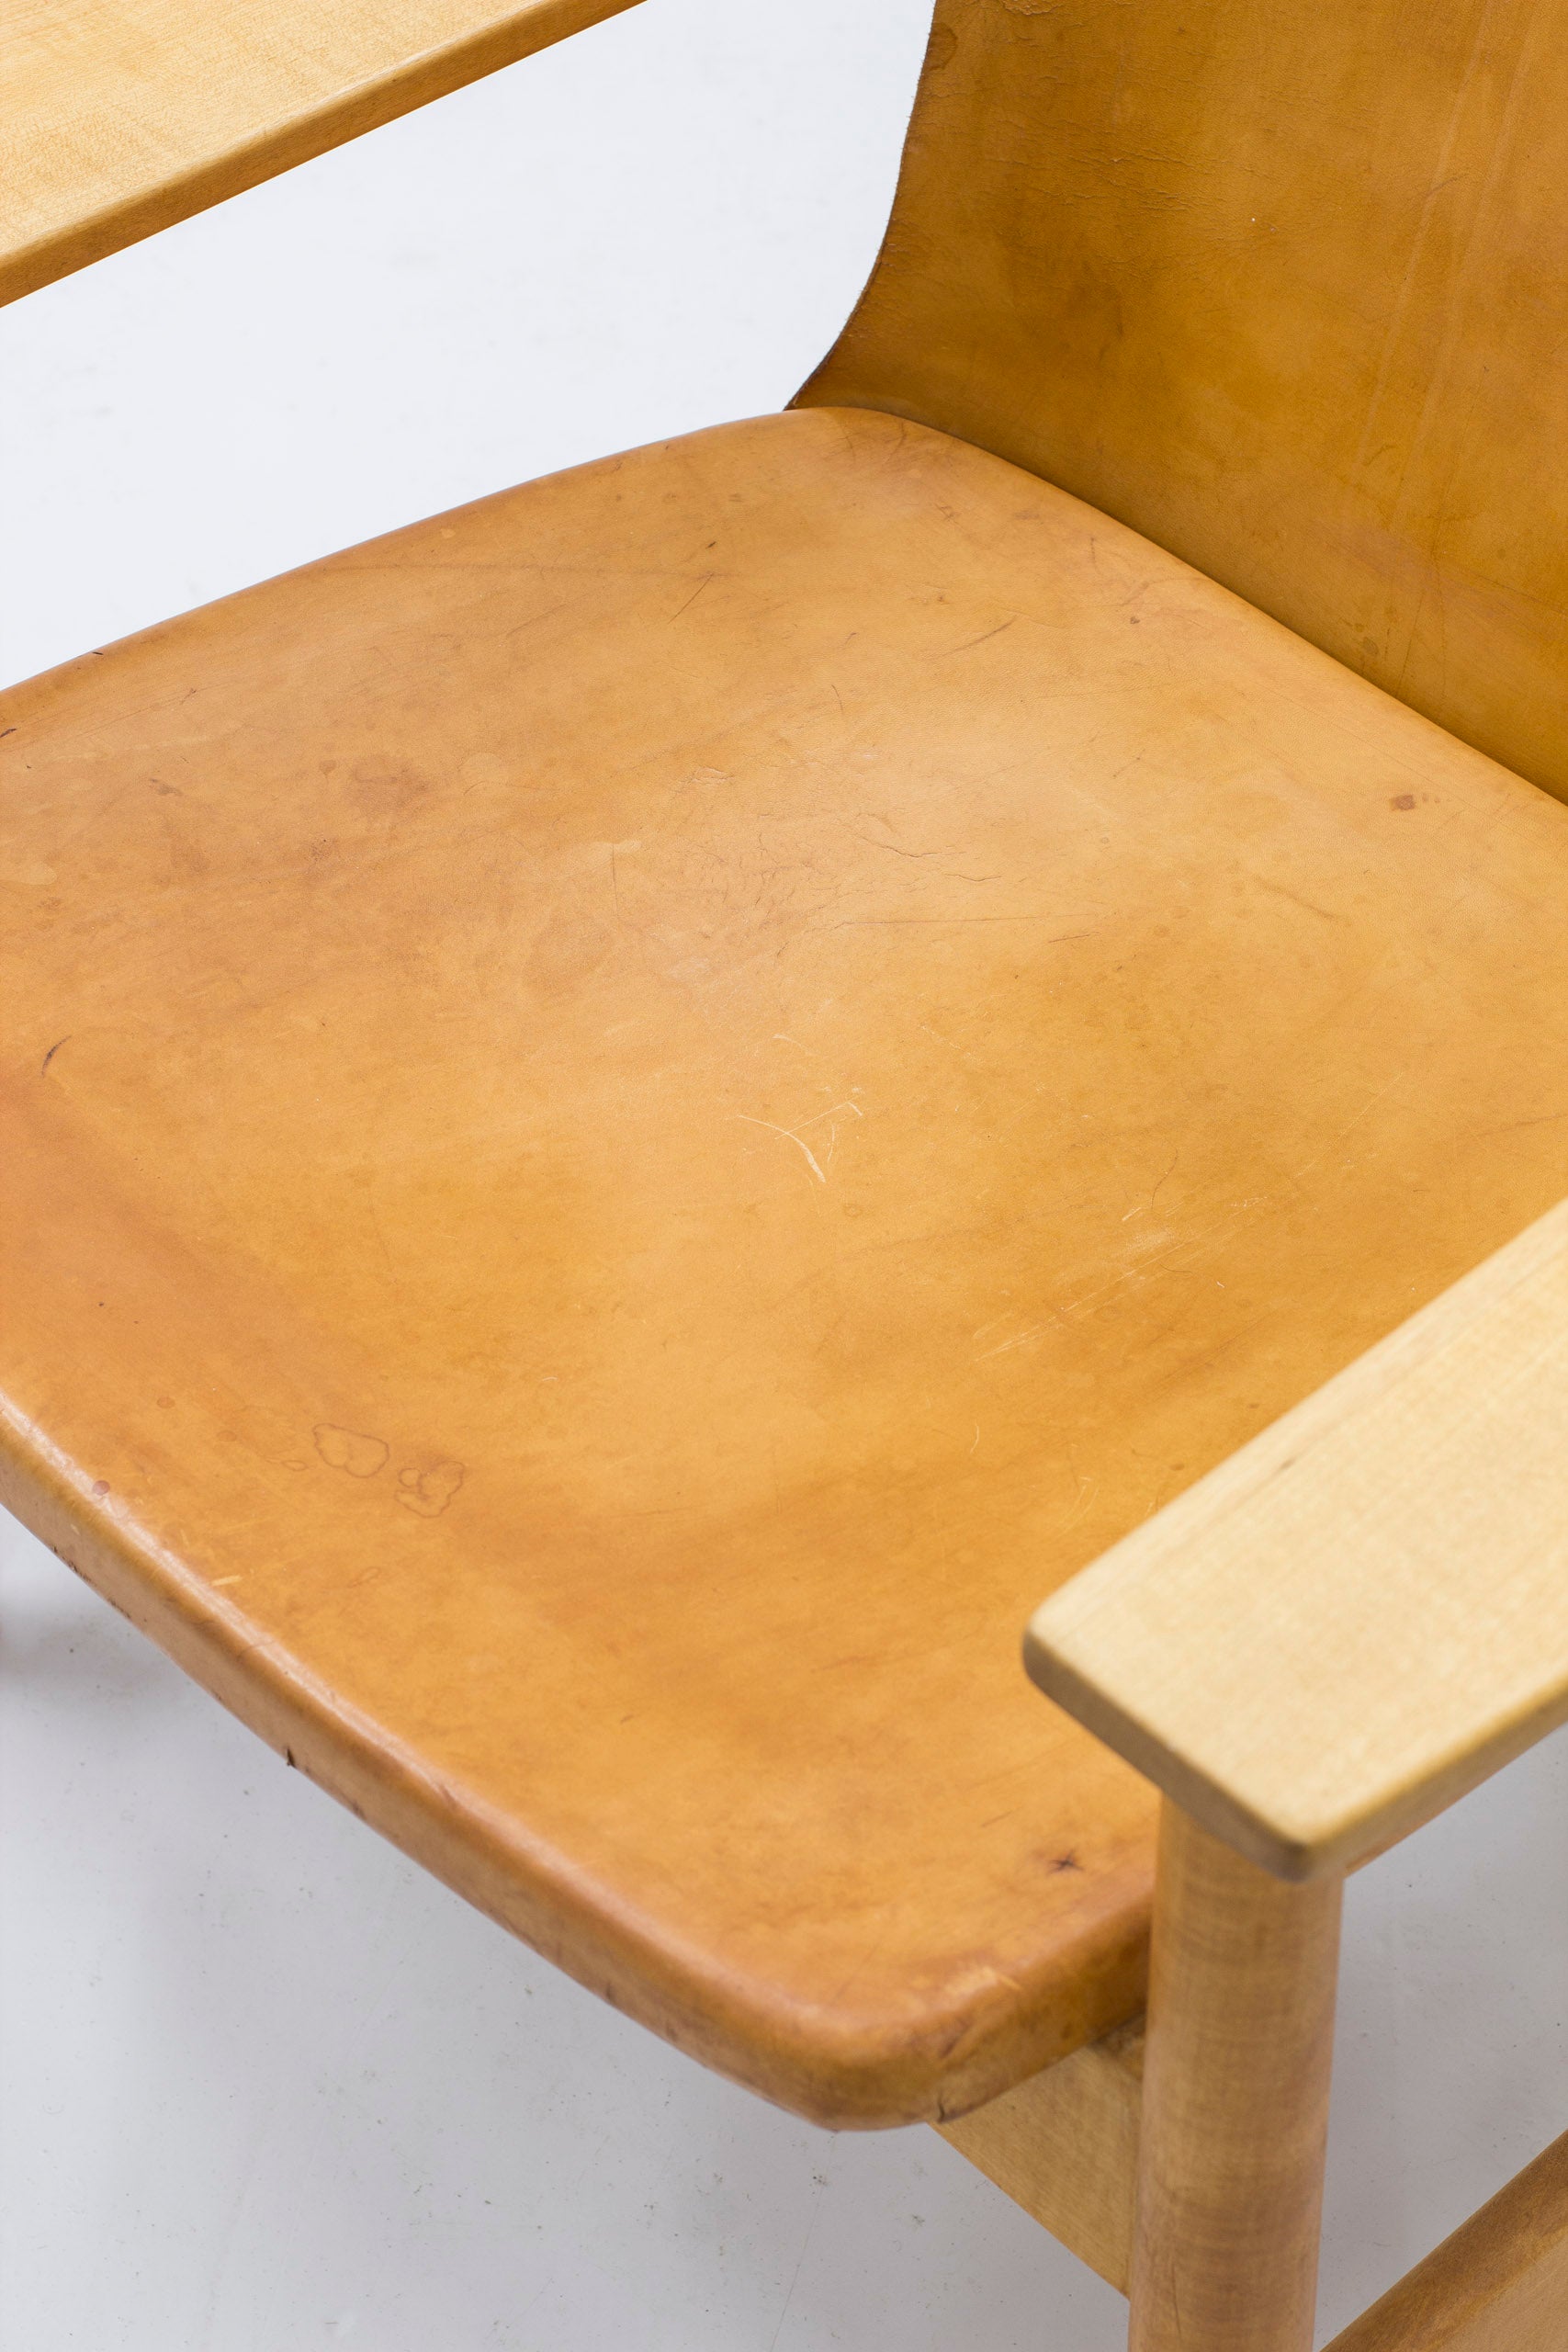 Swedish modern leather lounge chair